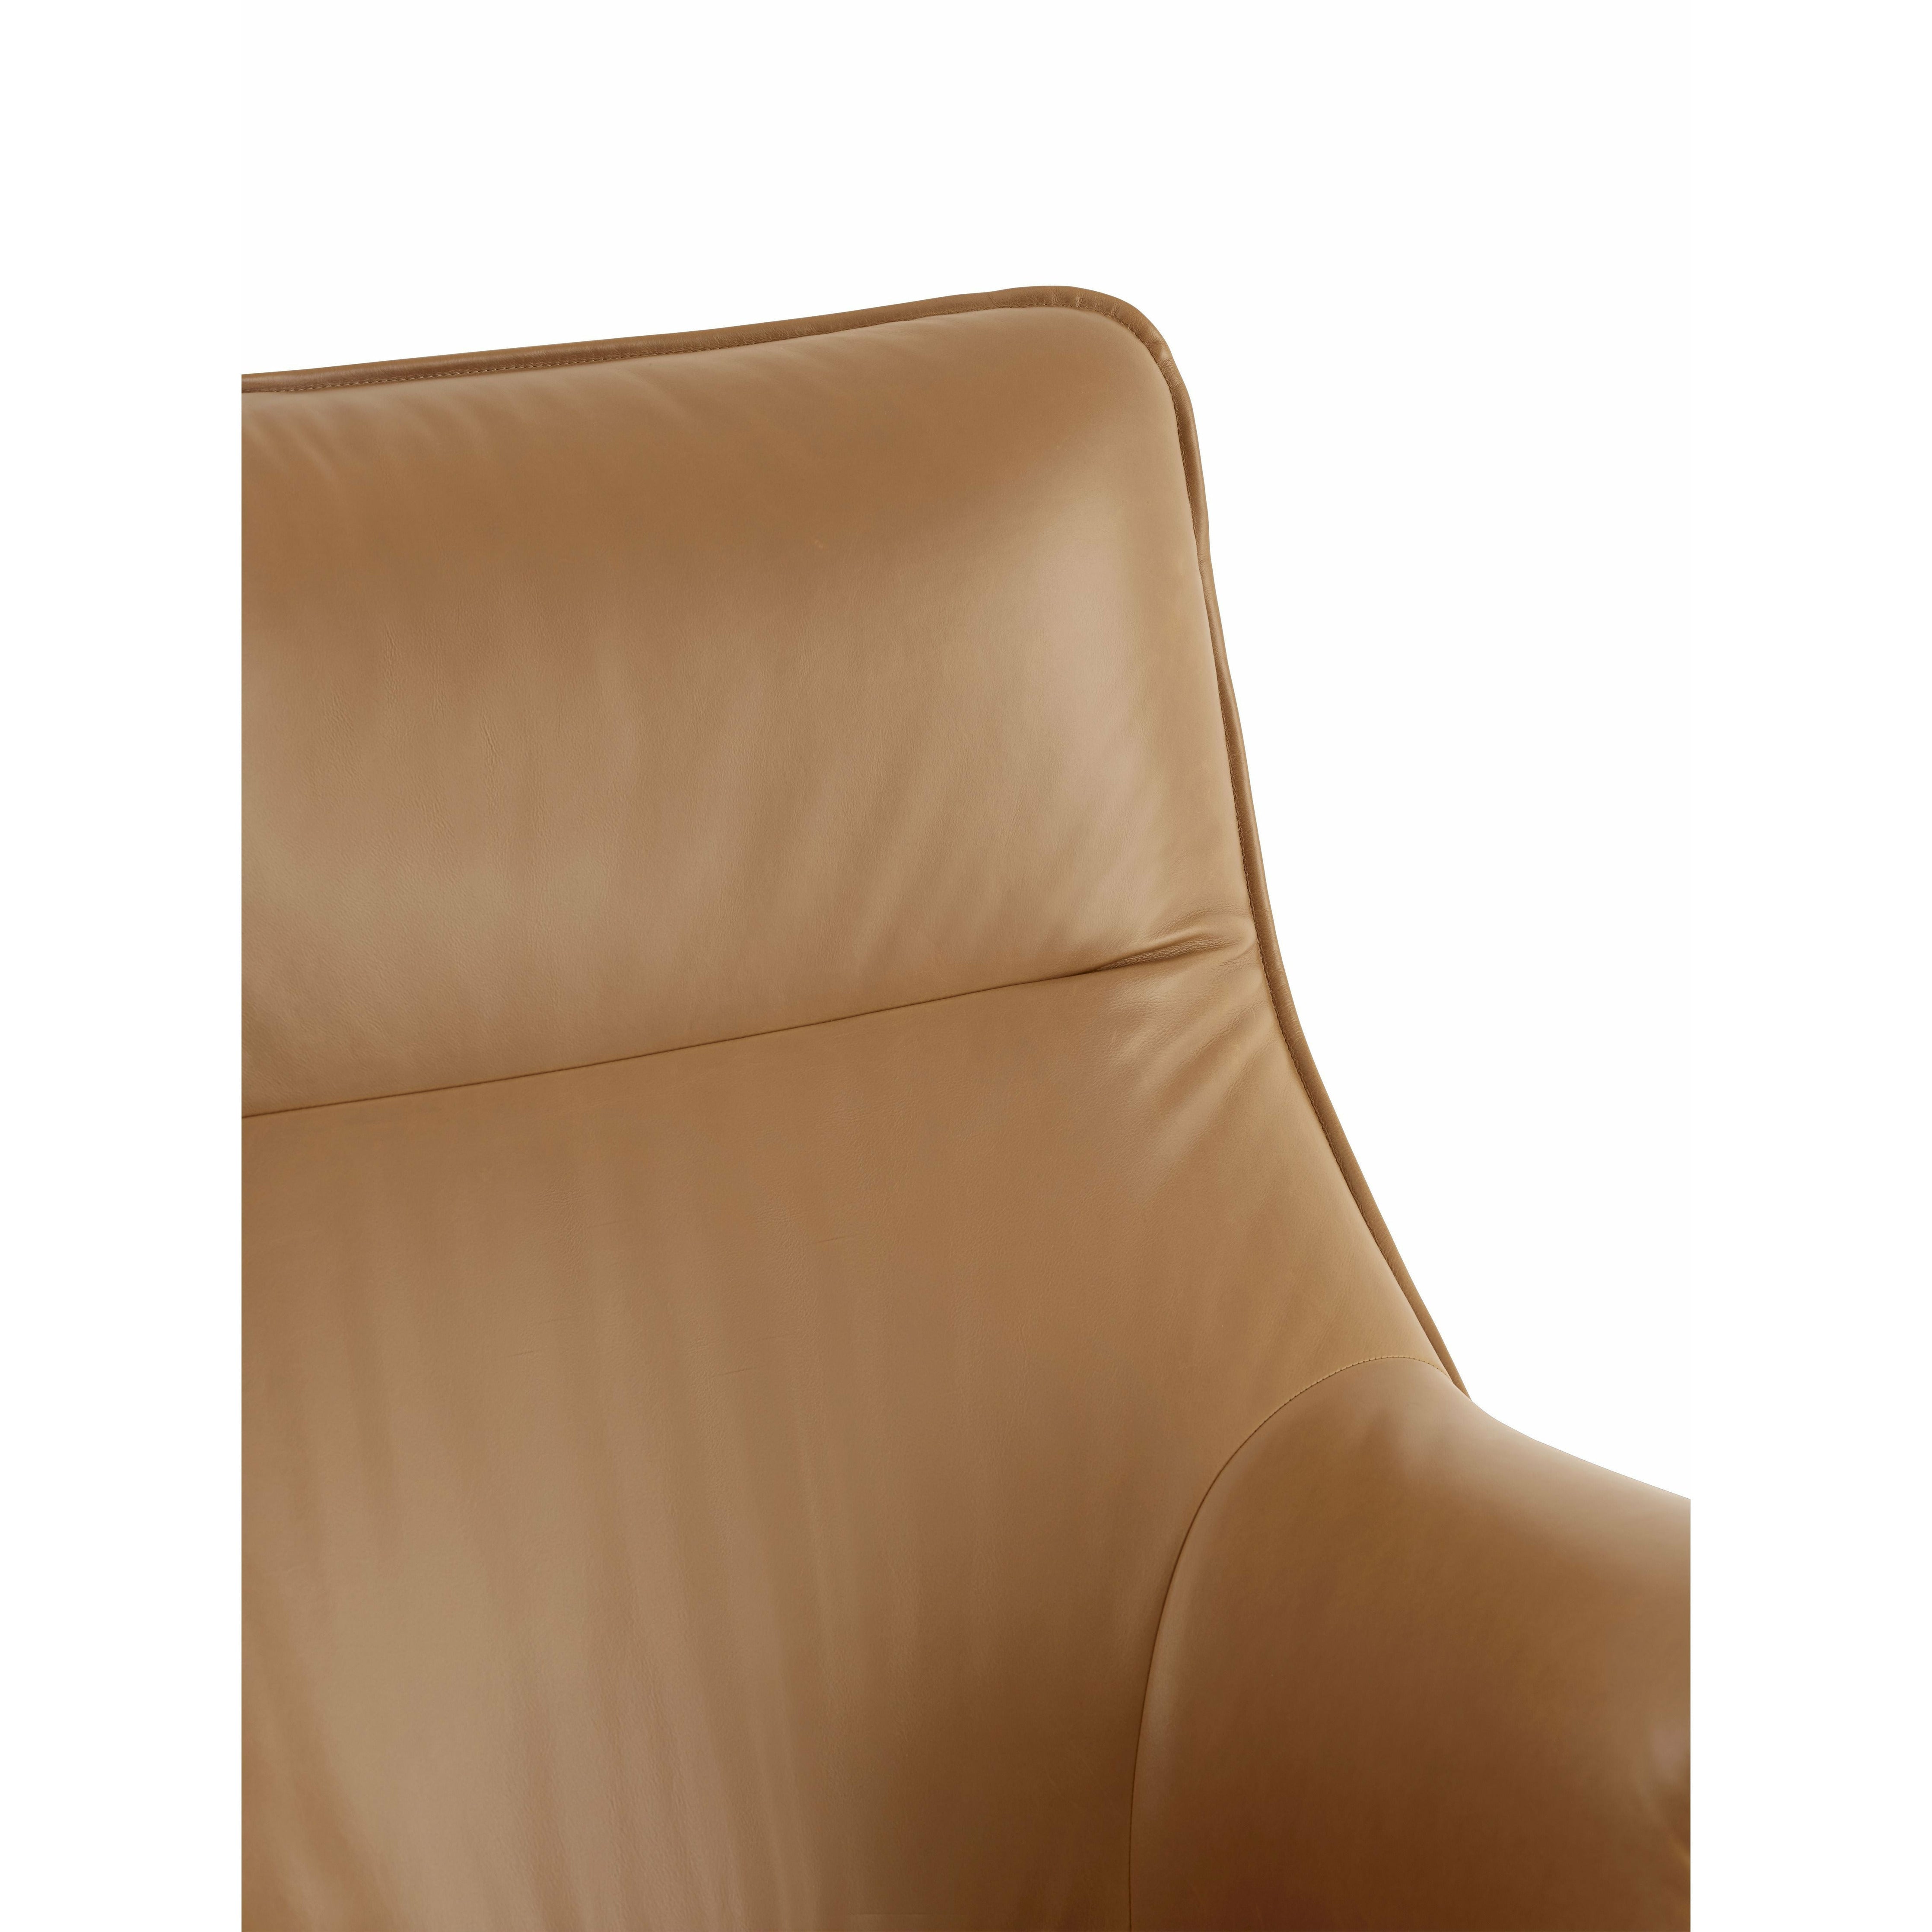 Muuto Doze lounge stol læder, cognac/antracit sort